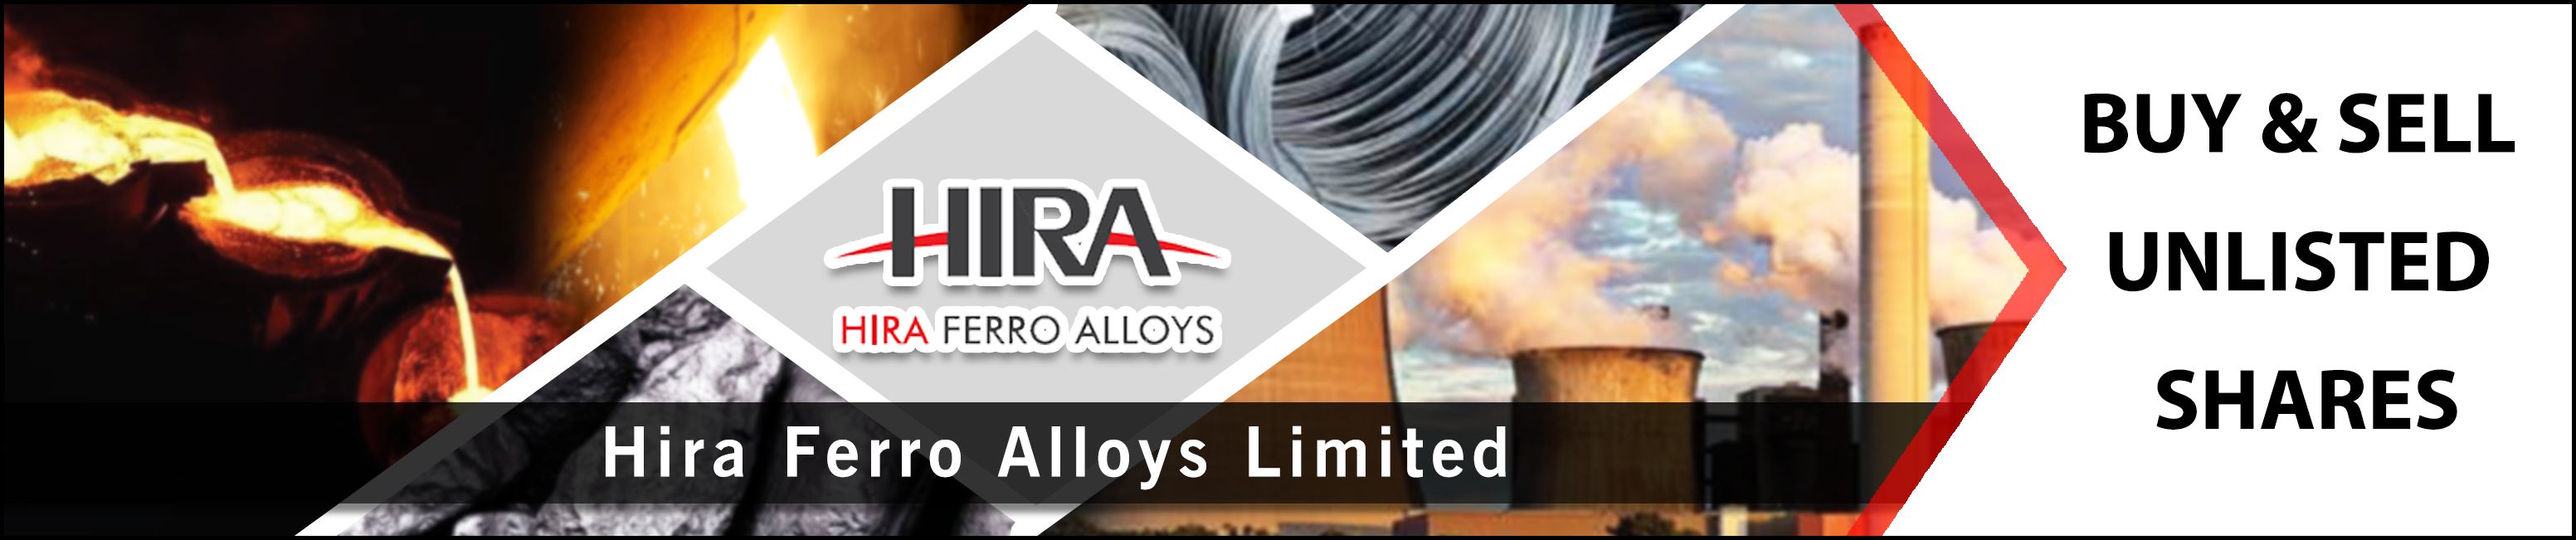 Hira Ferro Alloys Ltd Unlisted Shares